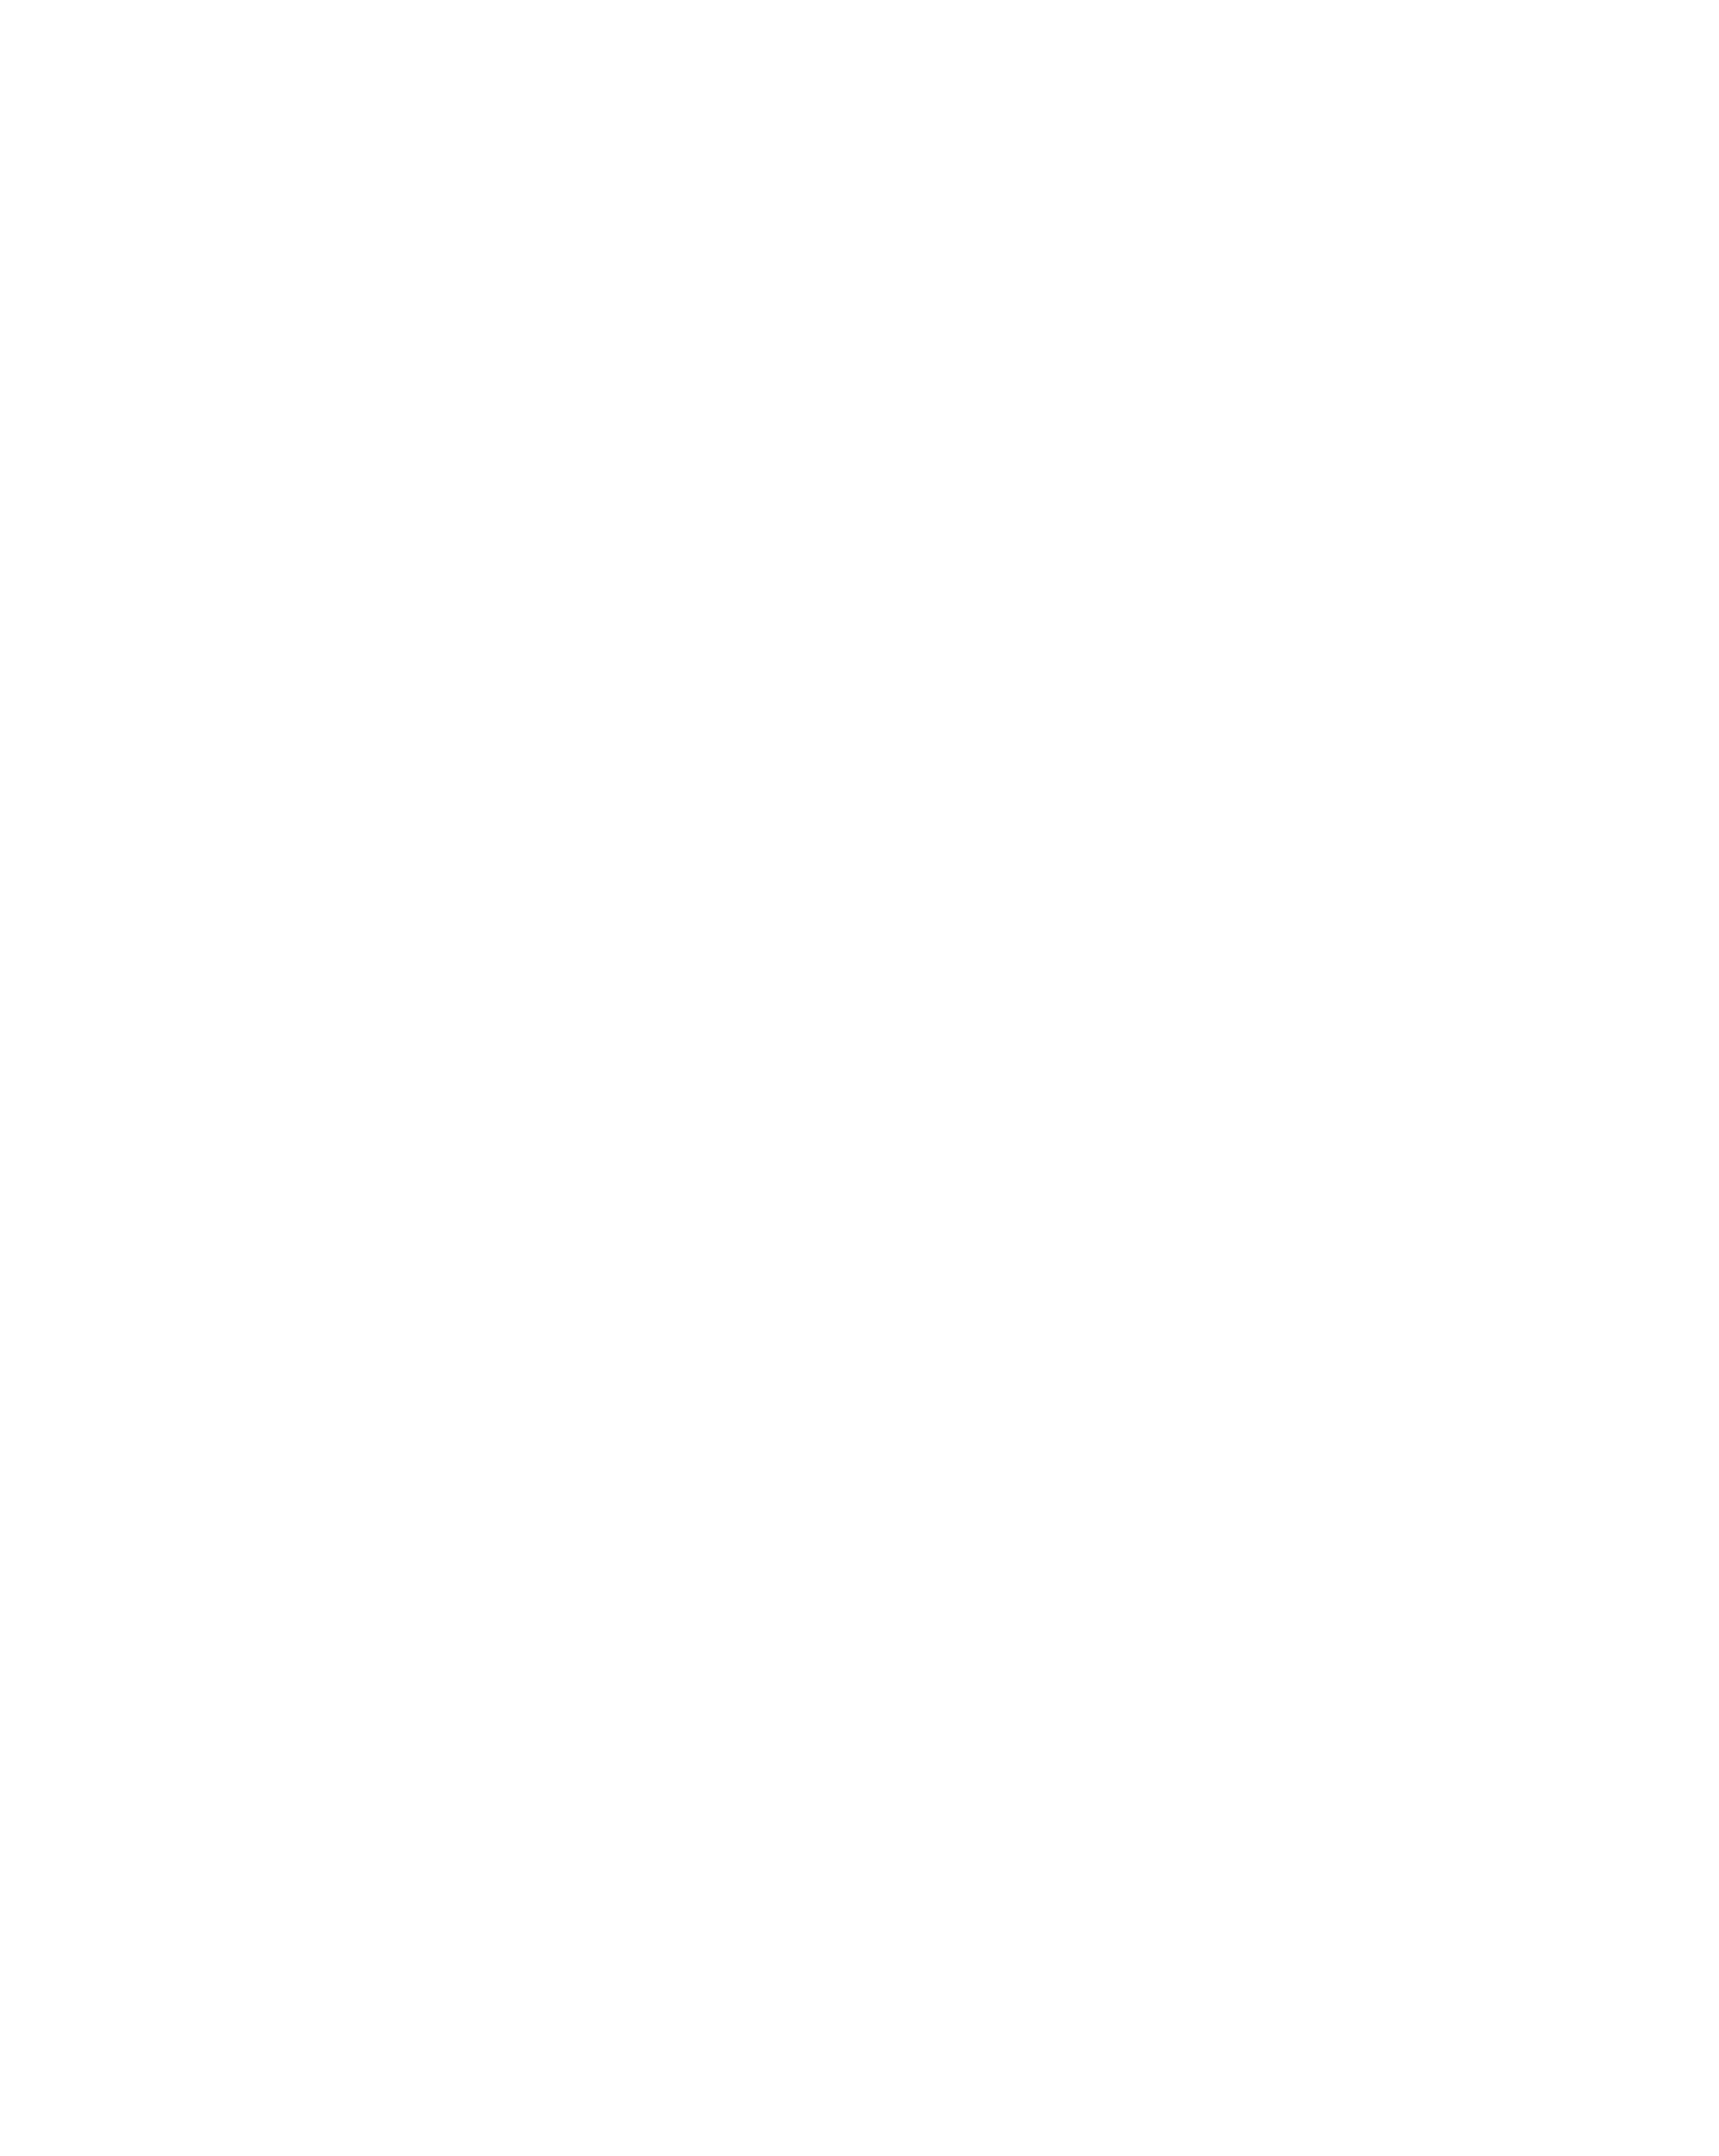 Hoboken Living Real Estate